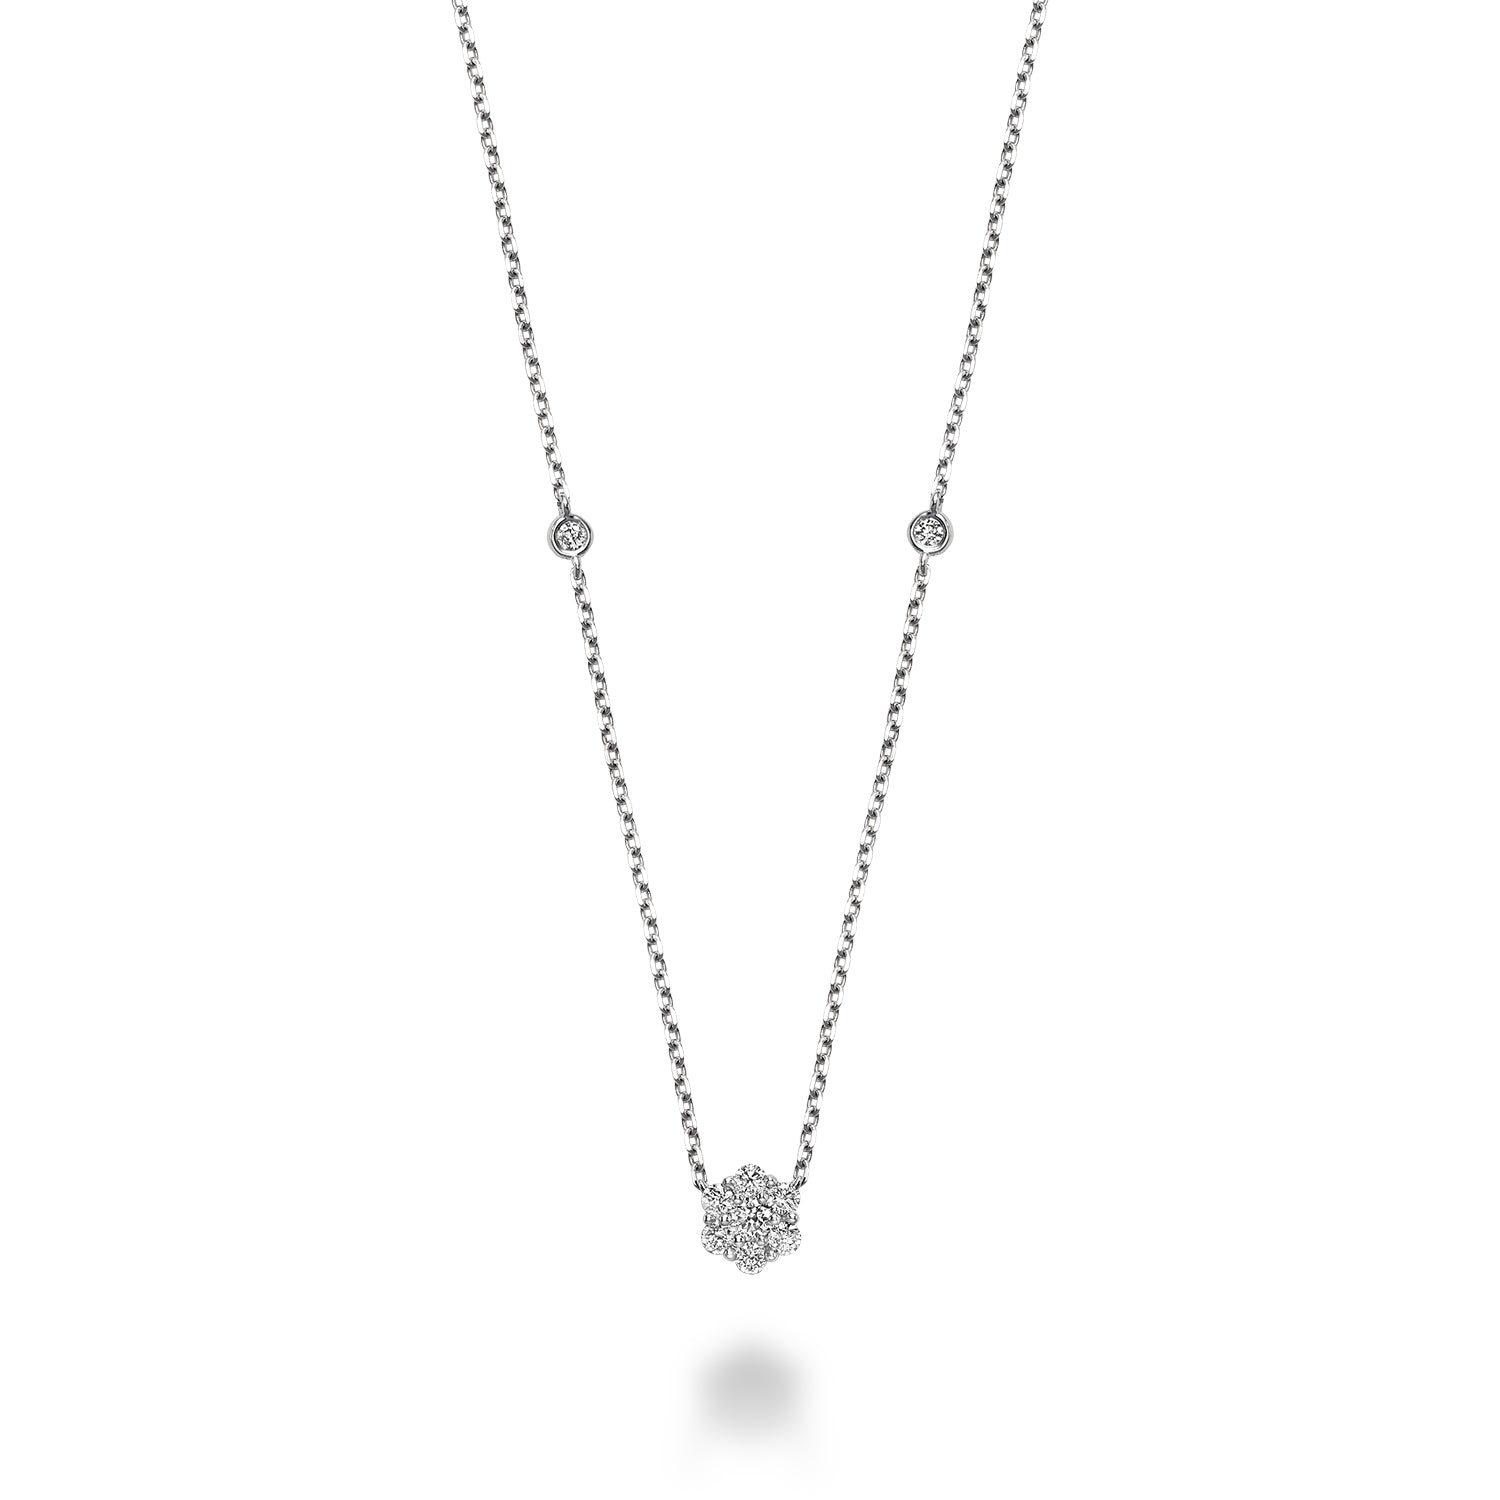 Hemsleys Collection 14K Flower Illusion Set Diamond Necklace